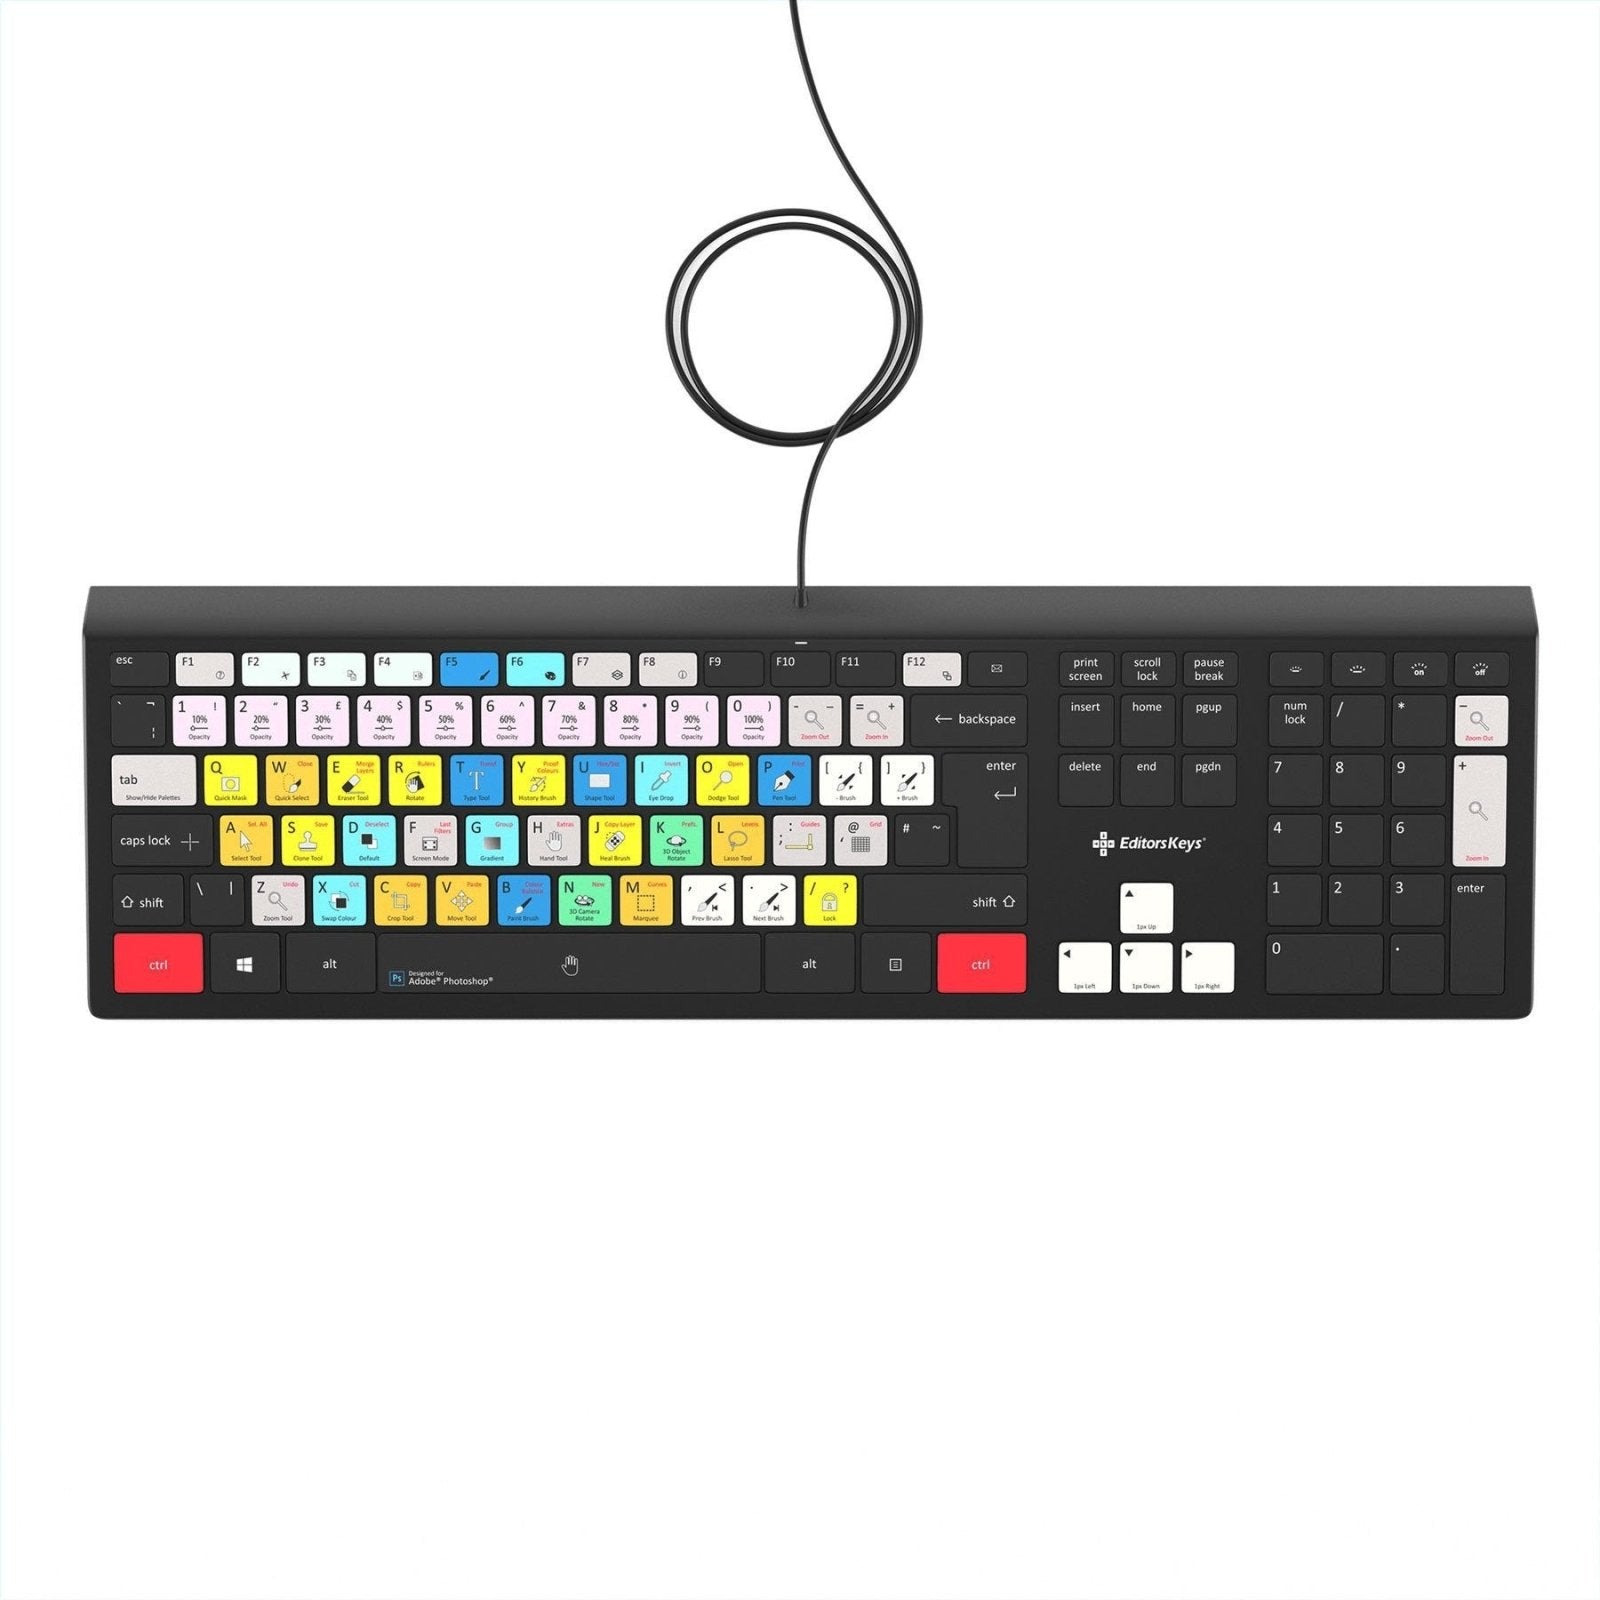 Adobe Photoshop Keyboard - Backlit - For Mac or PC - Editors Keys